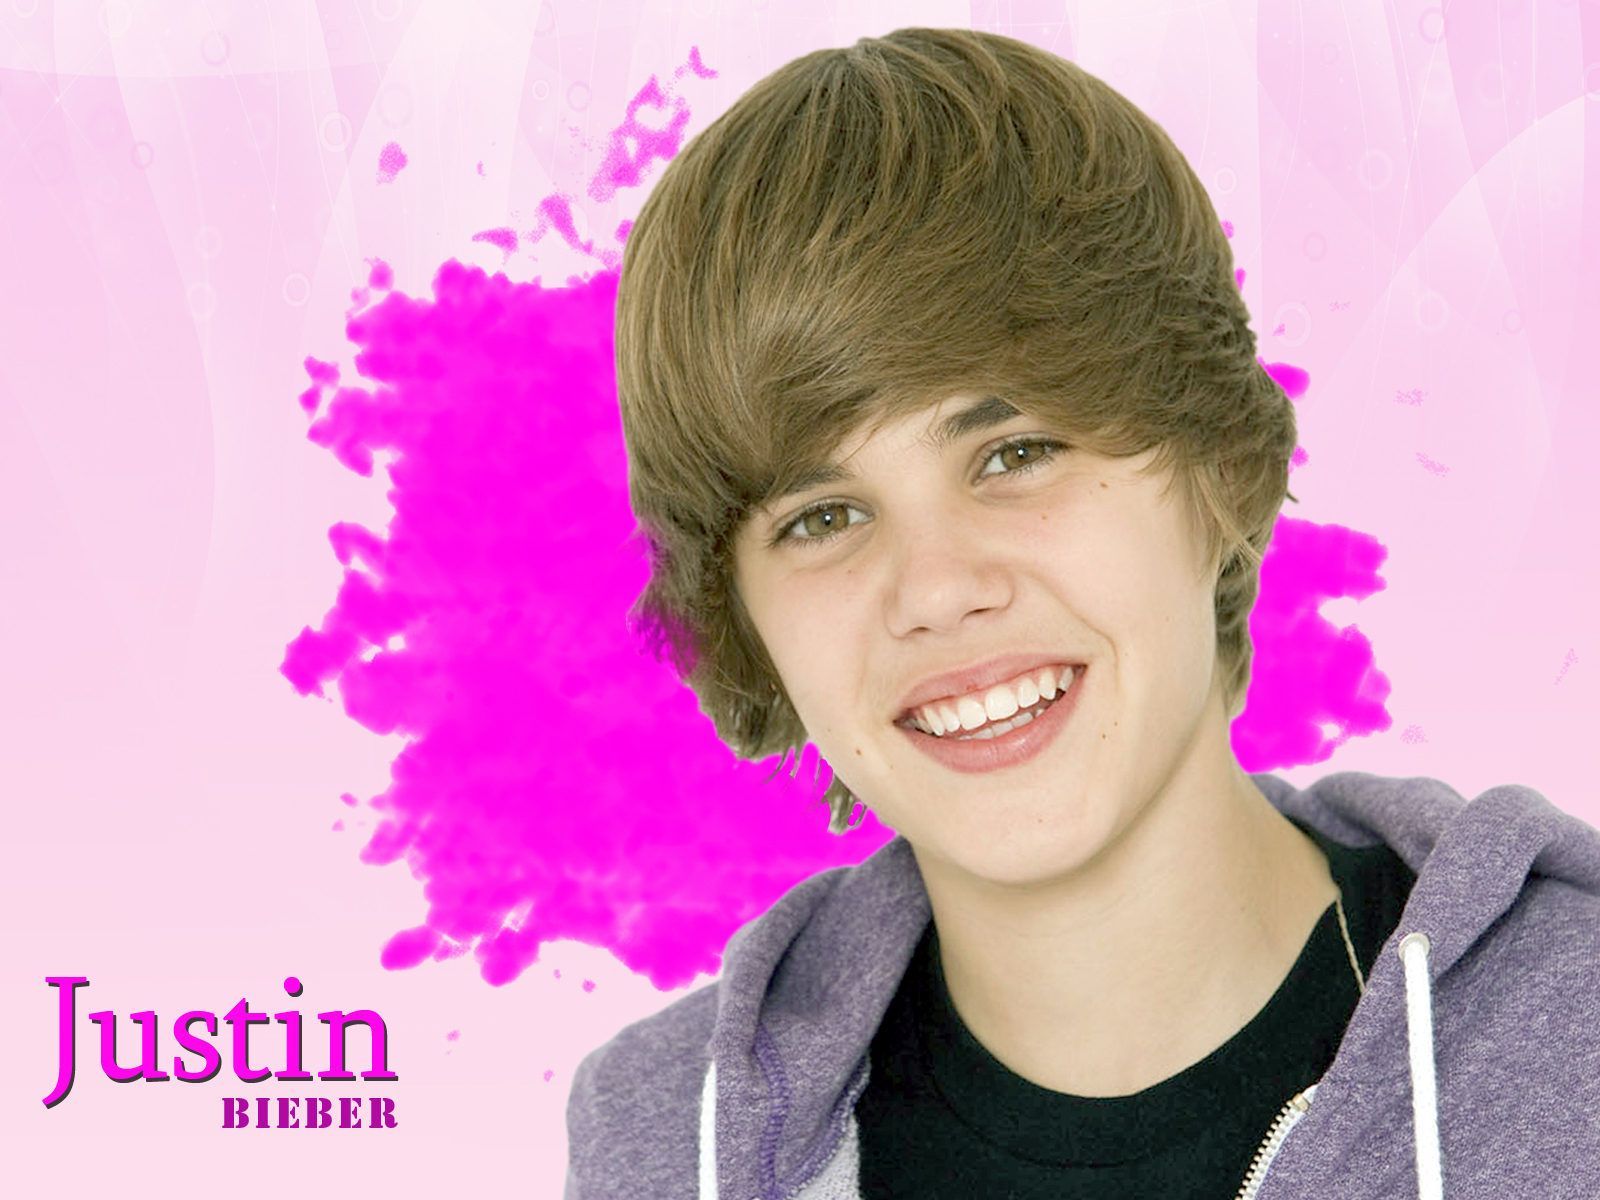 Download wallpaper - Justin Bieber wallpapers